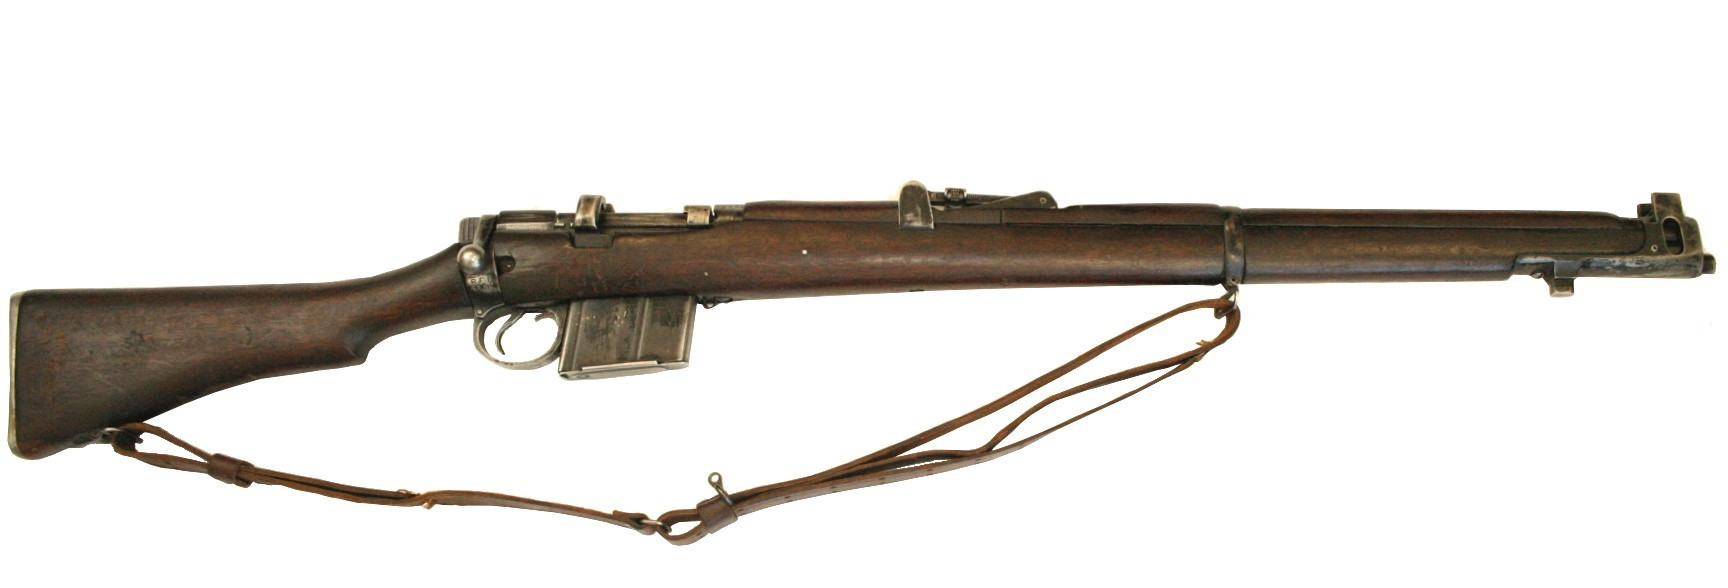 Lee Enfield Mk Iii Rifle #18